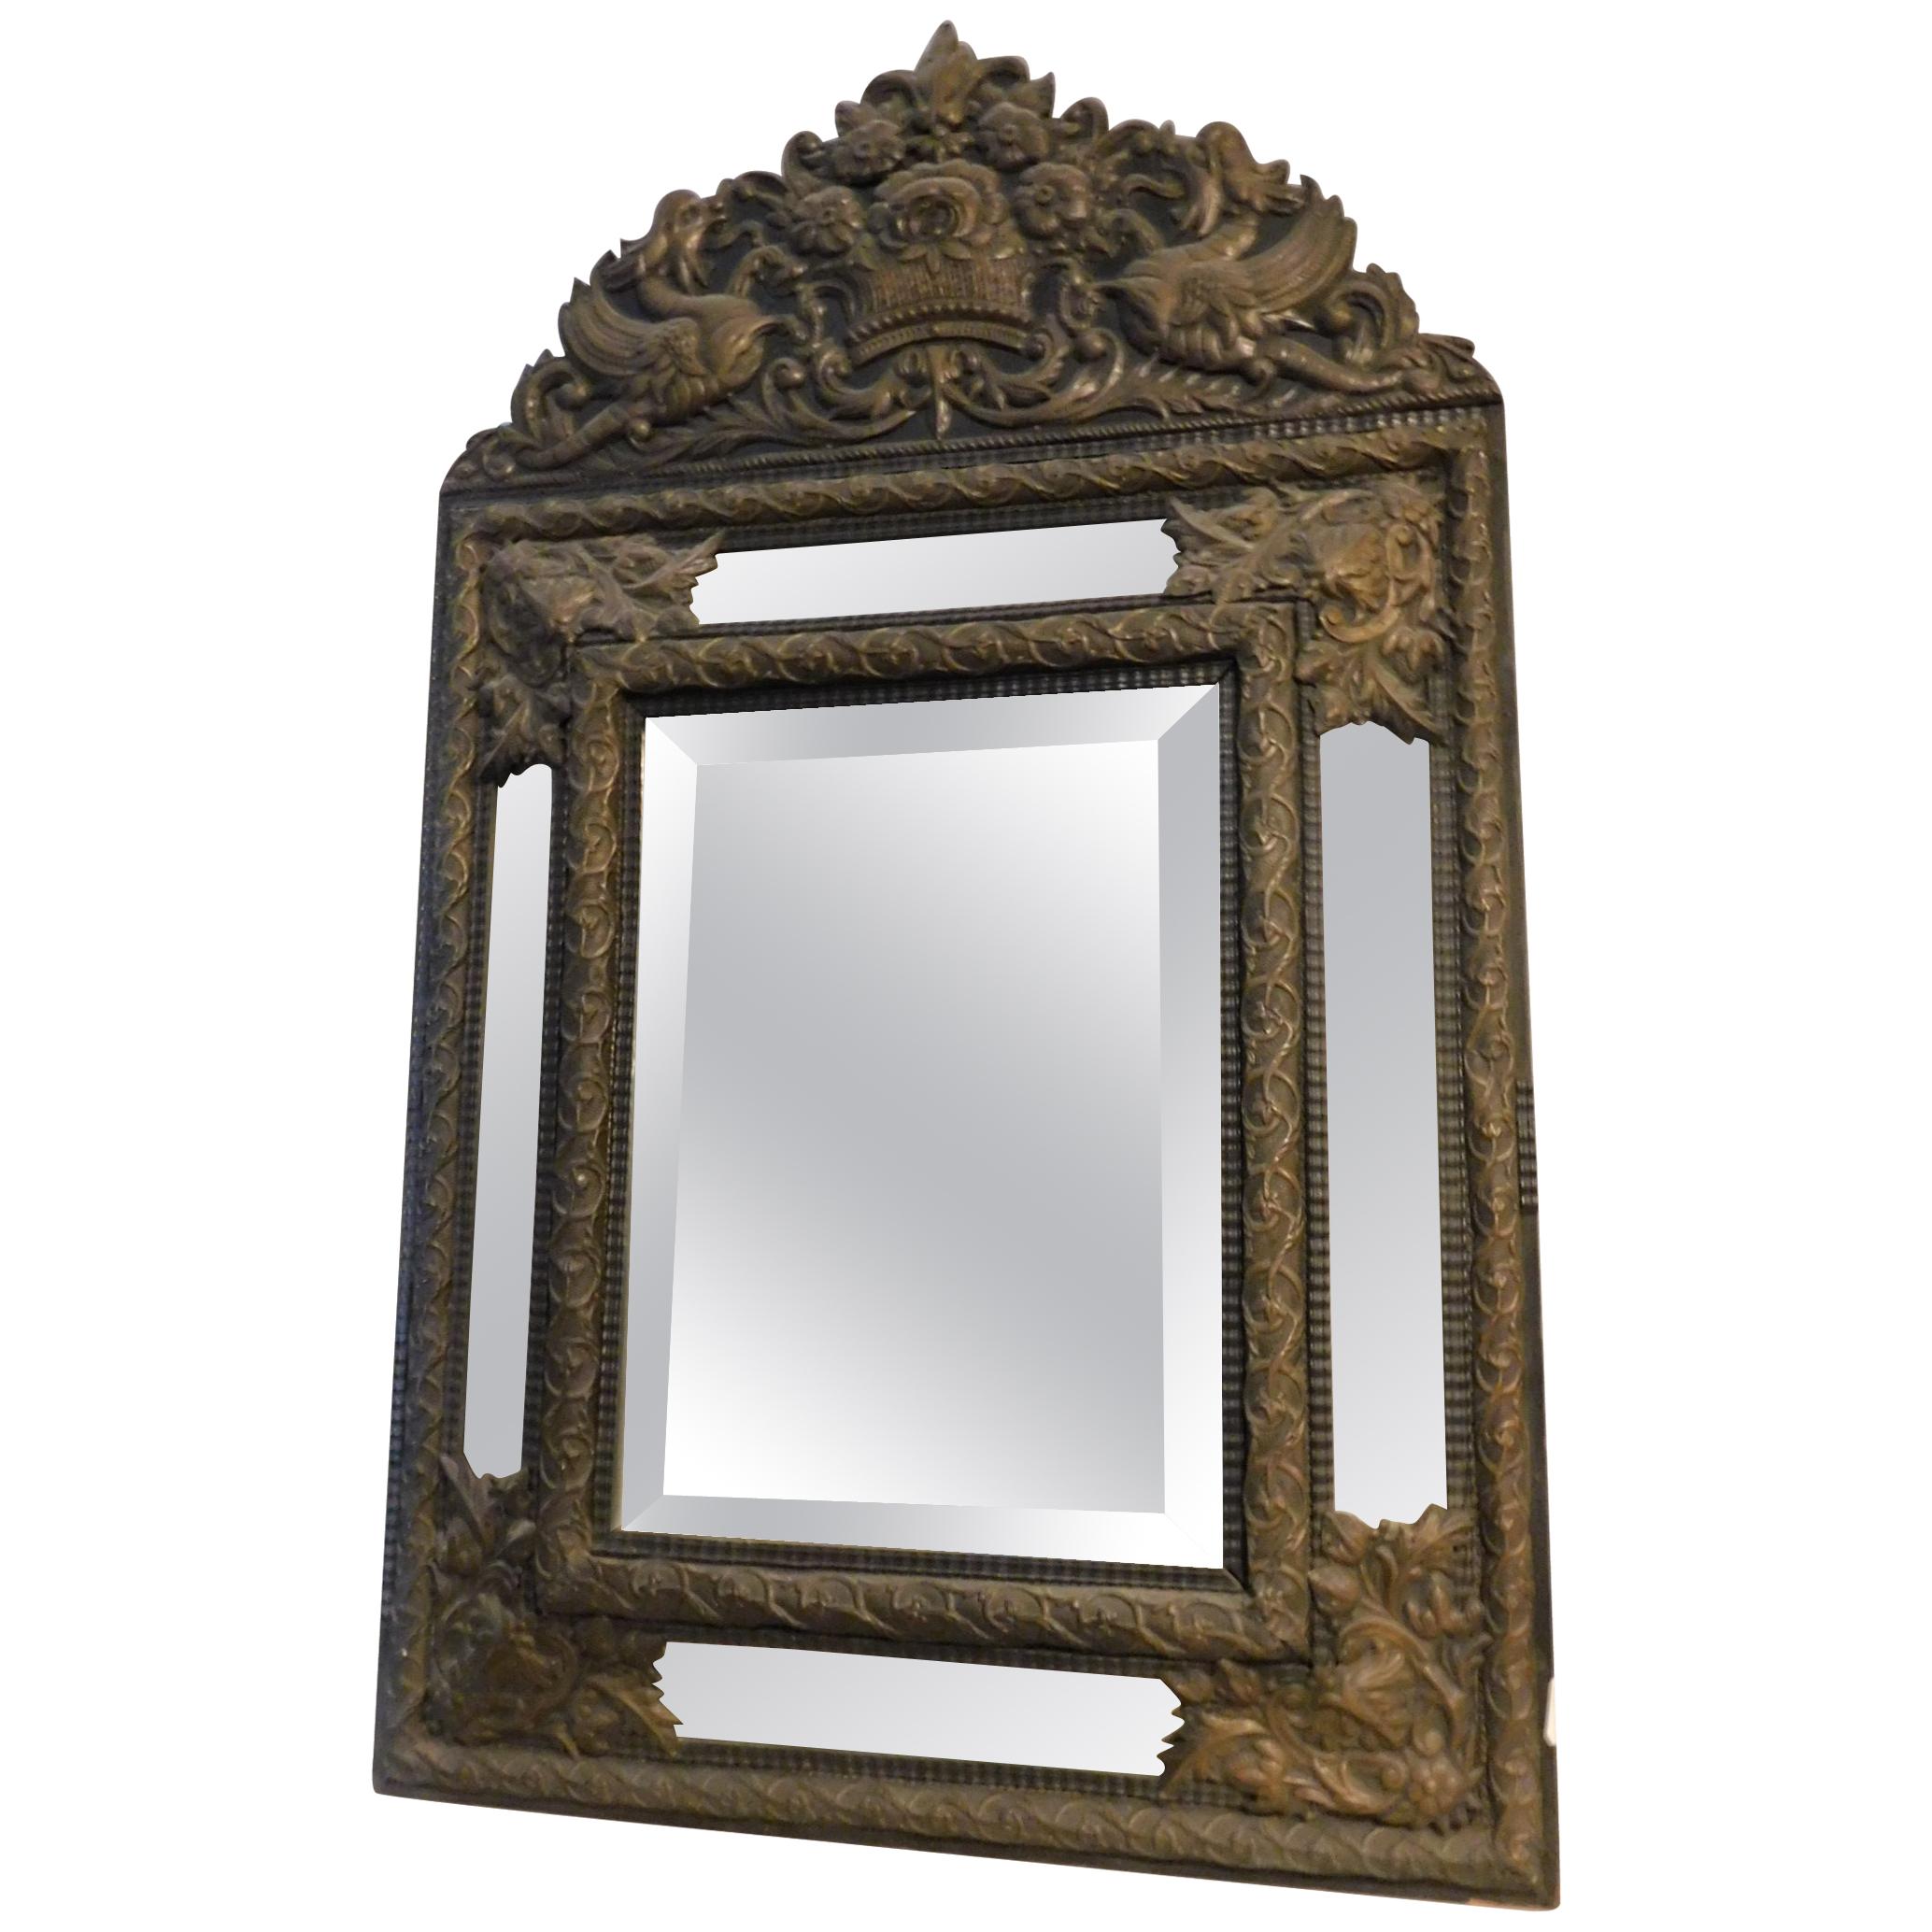 18th Century Vintage Antique Mirror with Metal Frame, Embossed, Brown